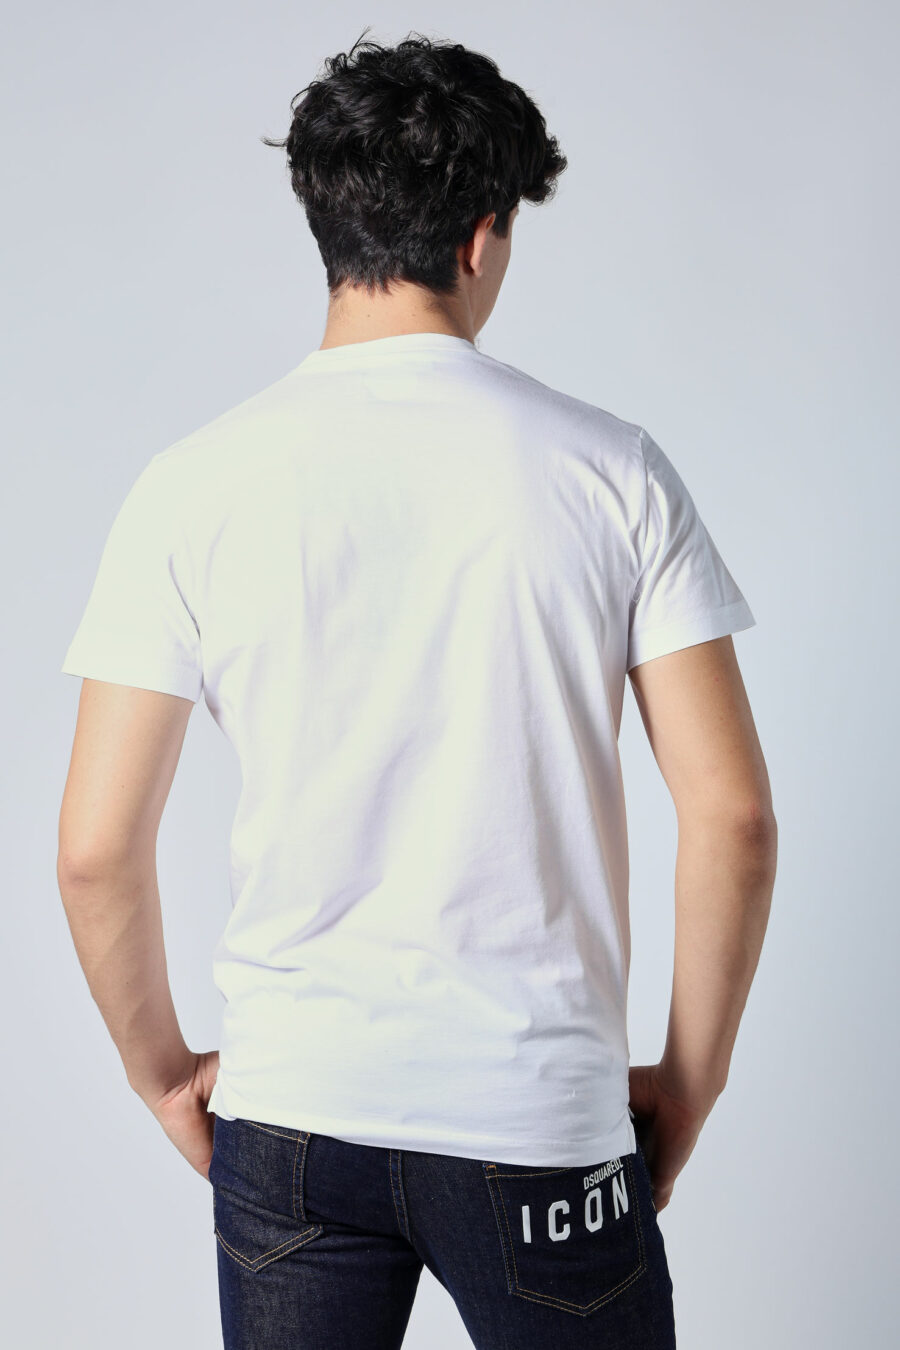 Camiseta blanca con maxilogo "college" azul - Untitled Catalog 05654